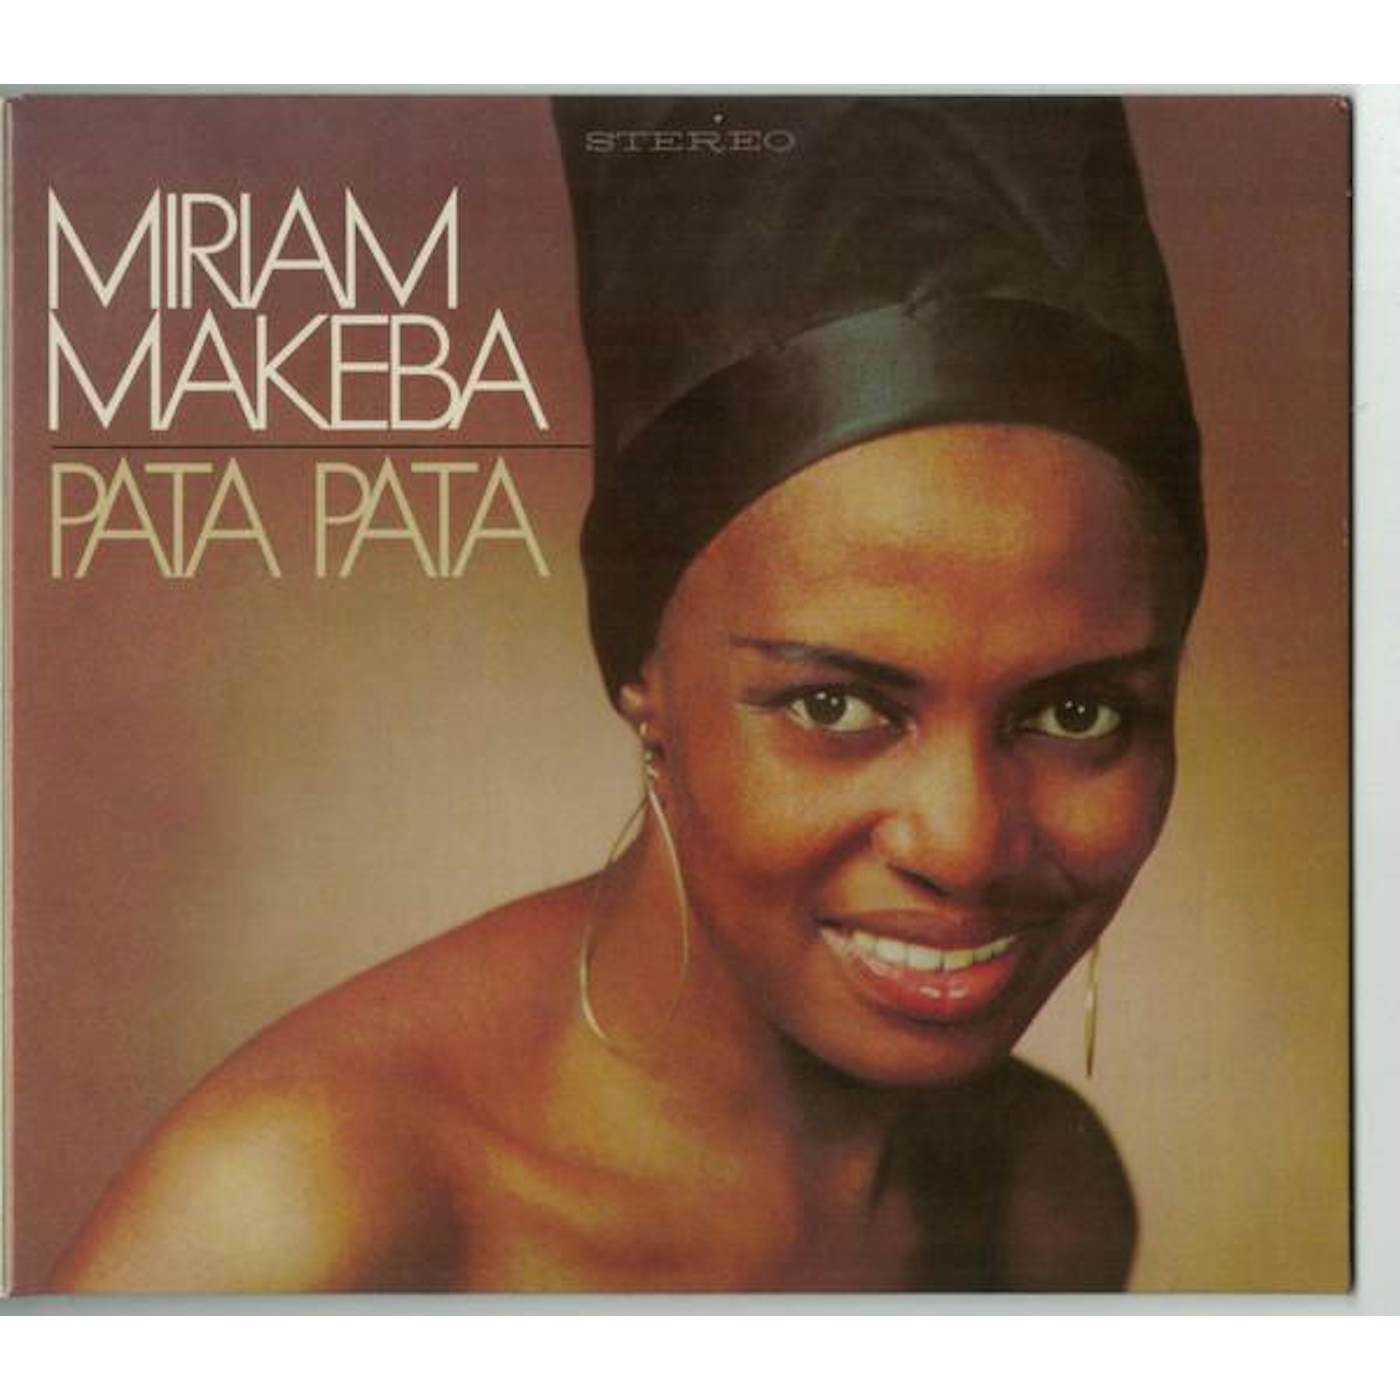 Miriam Makeba PATA PATA ( DEFINITIVE REMASTERED EDITION) CD